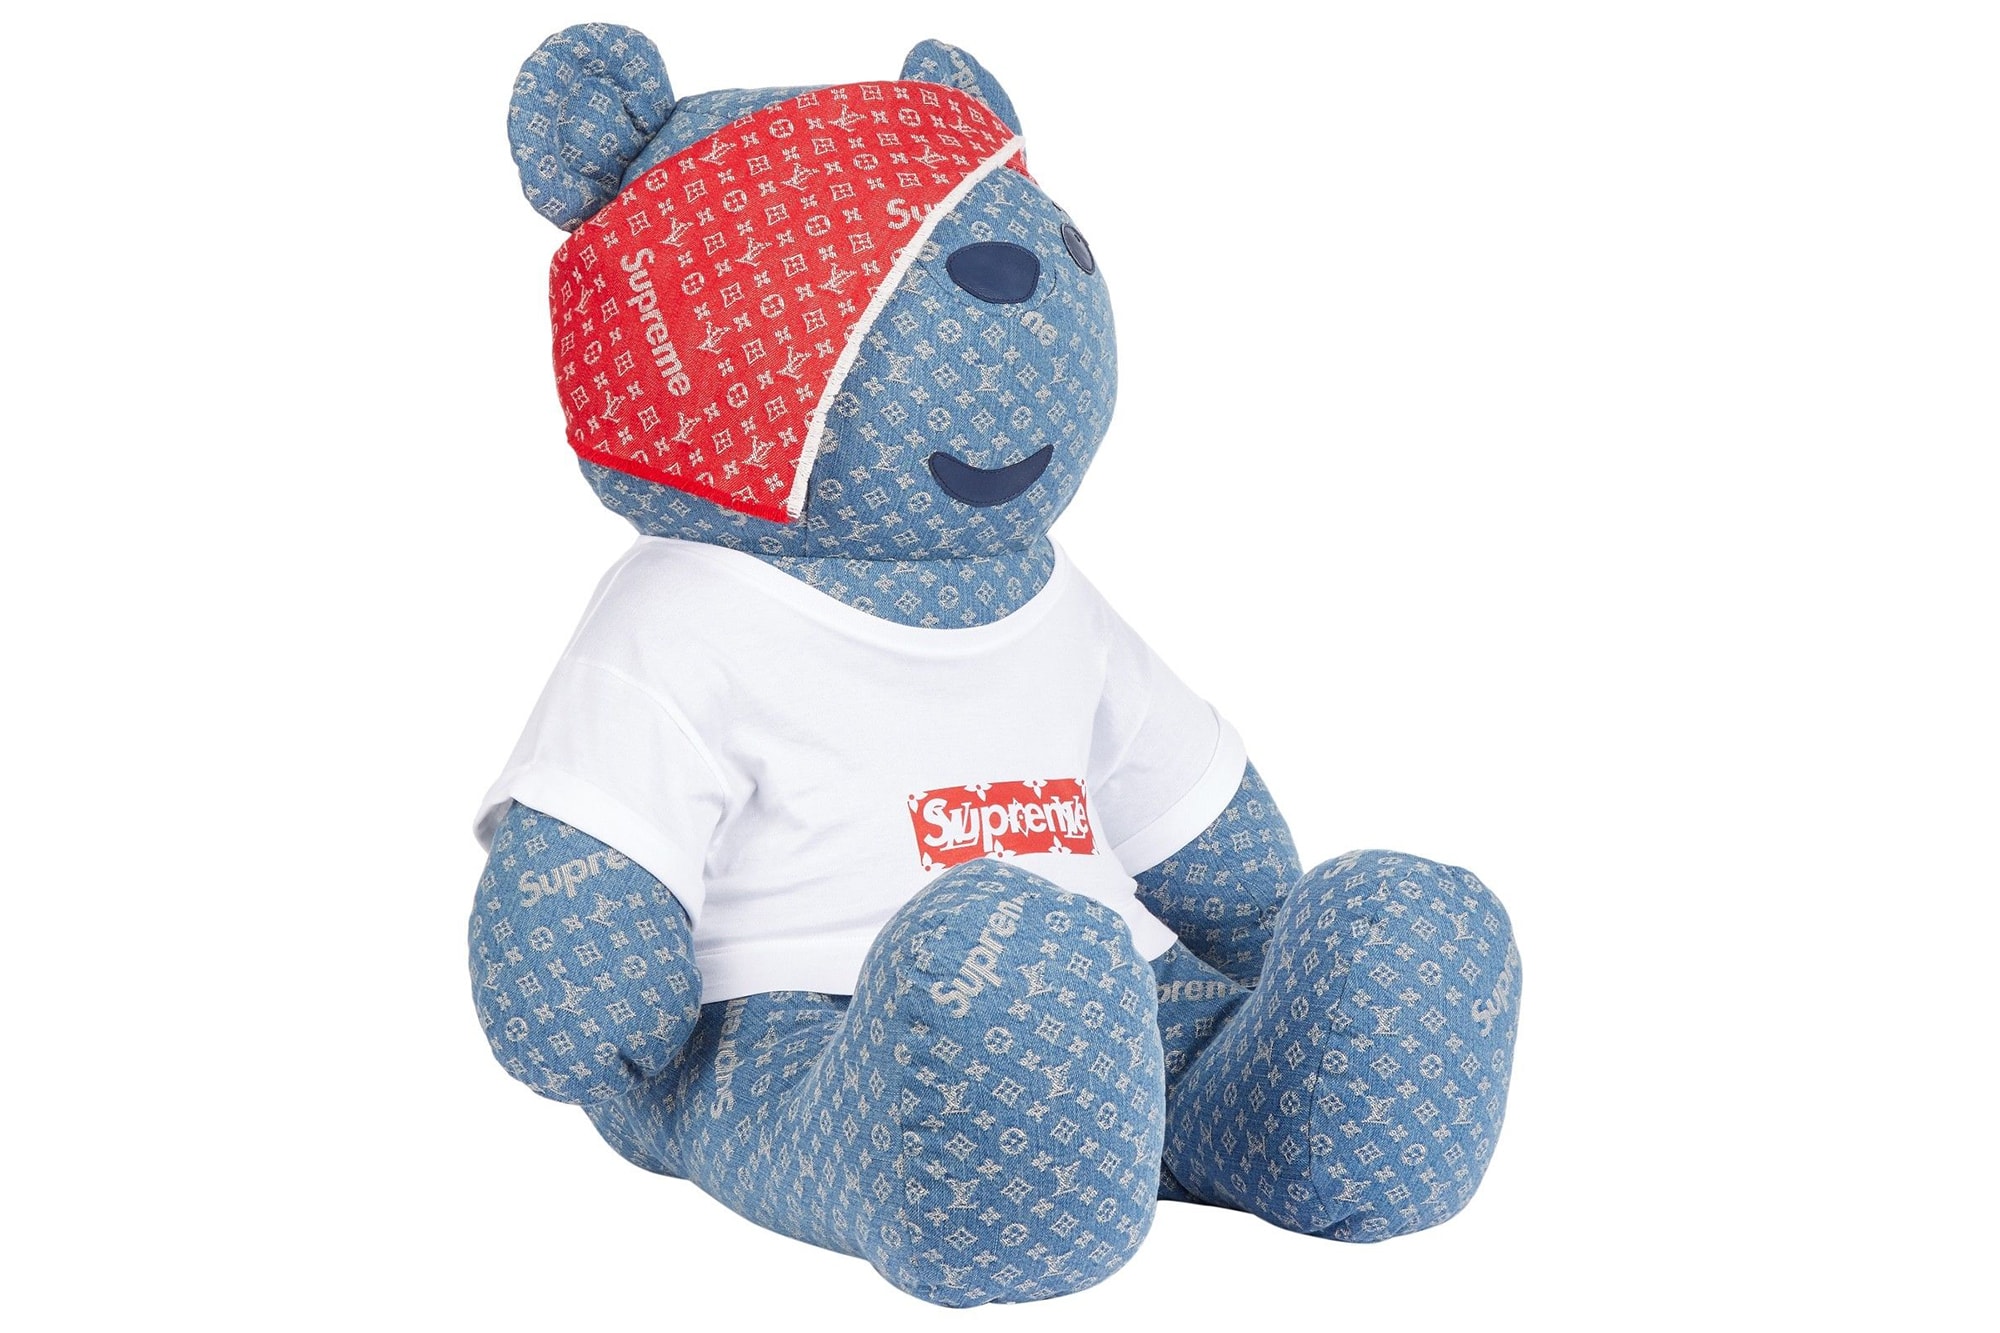 Supreme x Louis Vuitton Teddy Bear BBC Children In Need Pudsy Edie Campbell Kim Jones James Jebbia